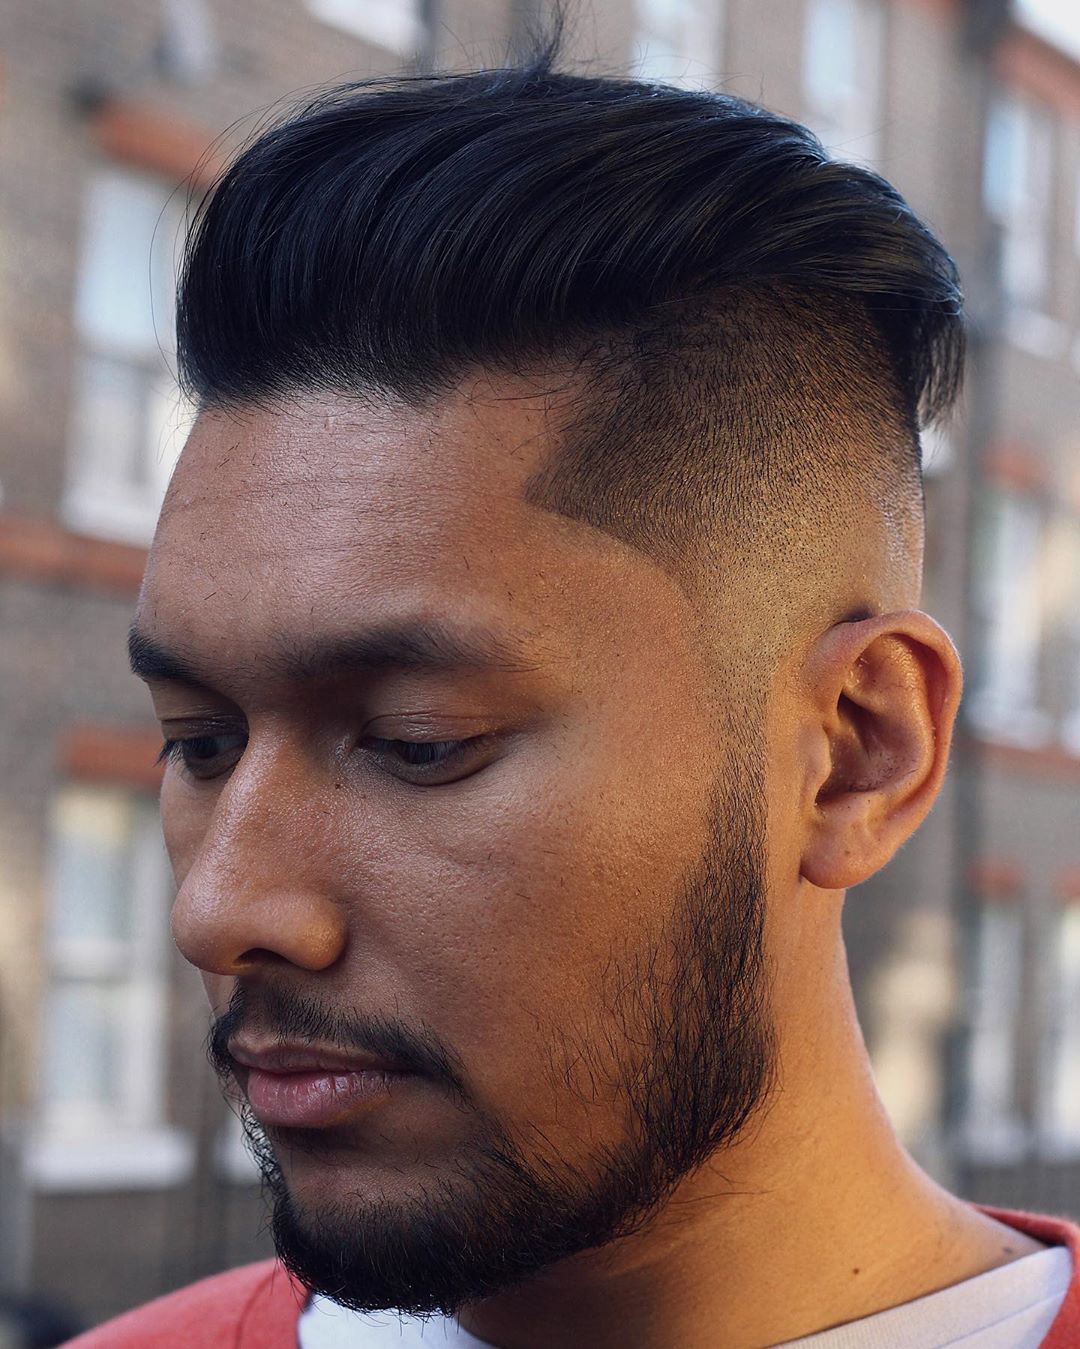 20 Classic Undercut Hairstyles For Men - StylesRant